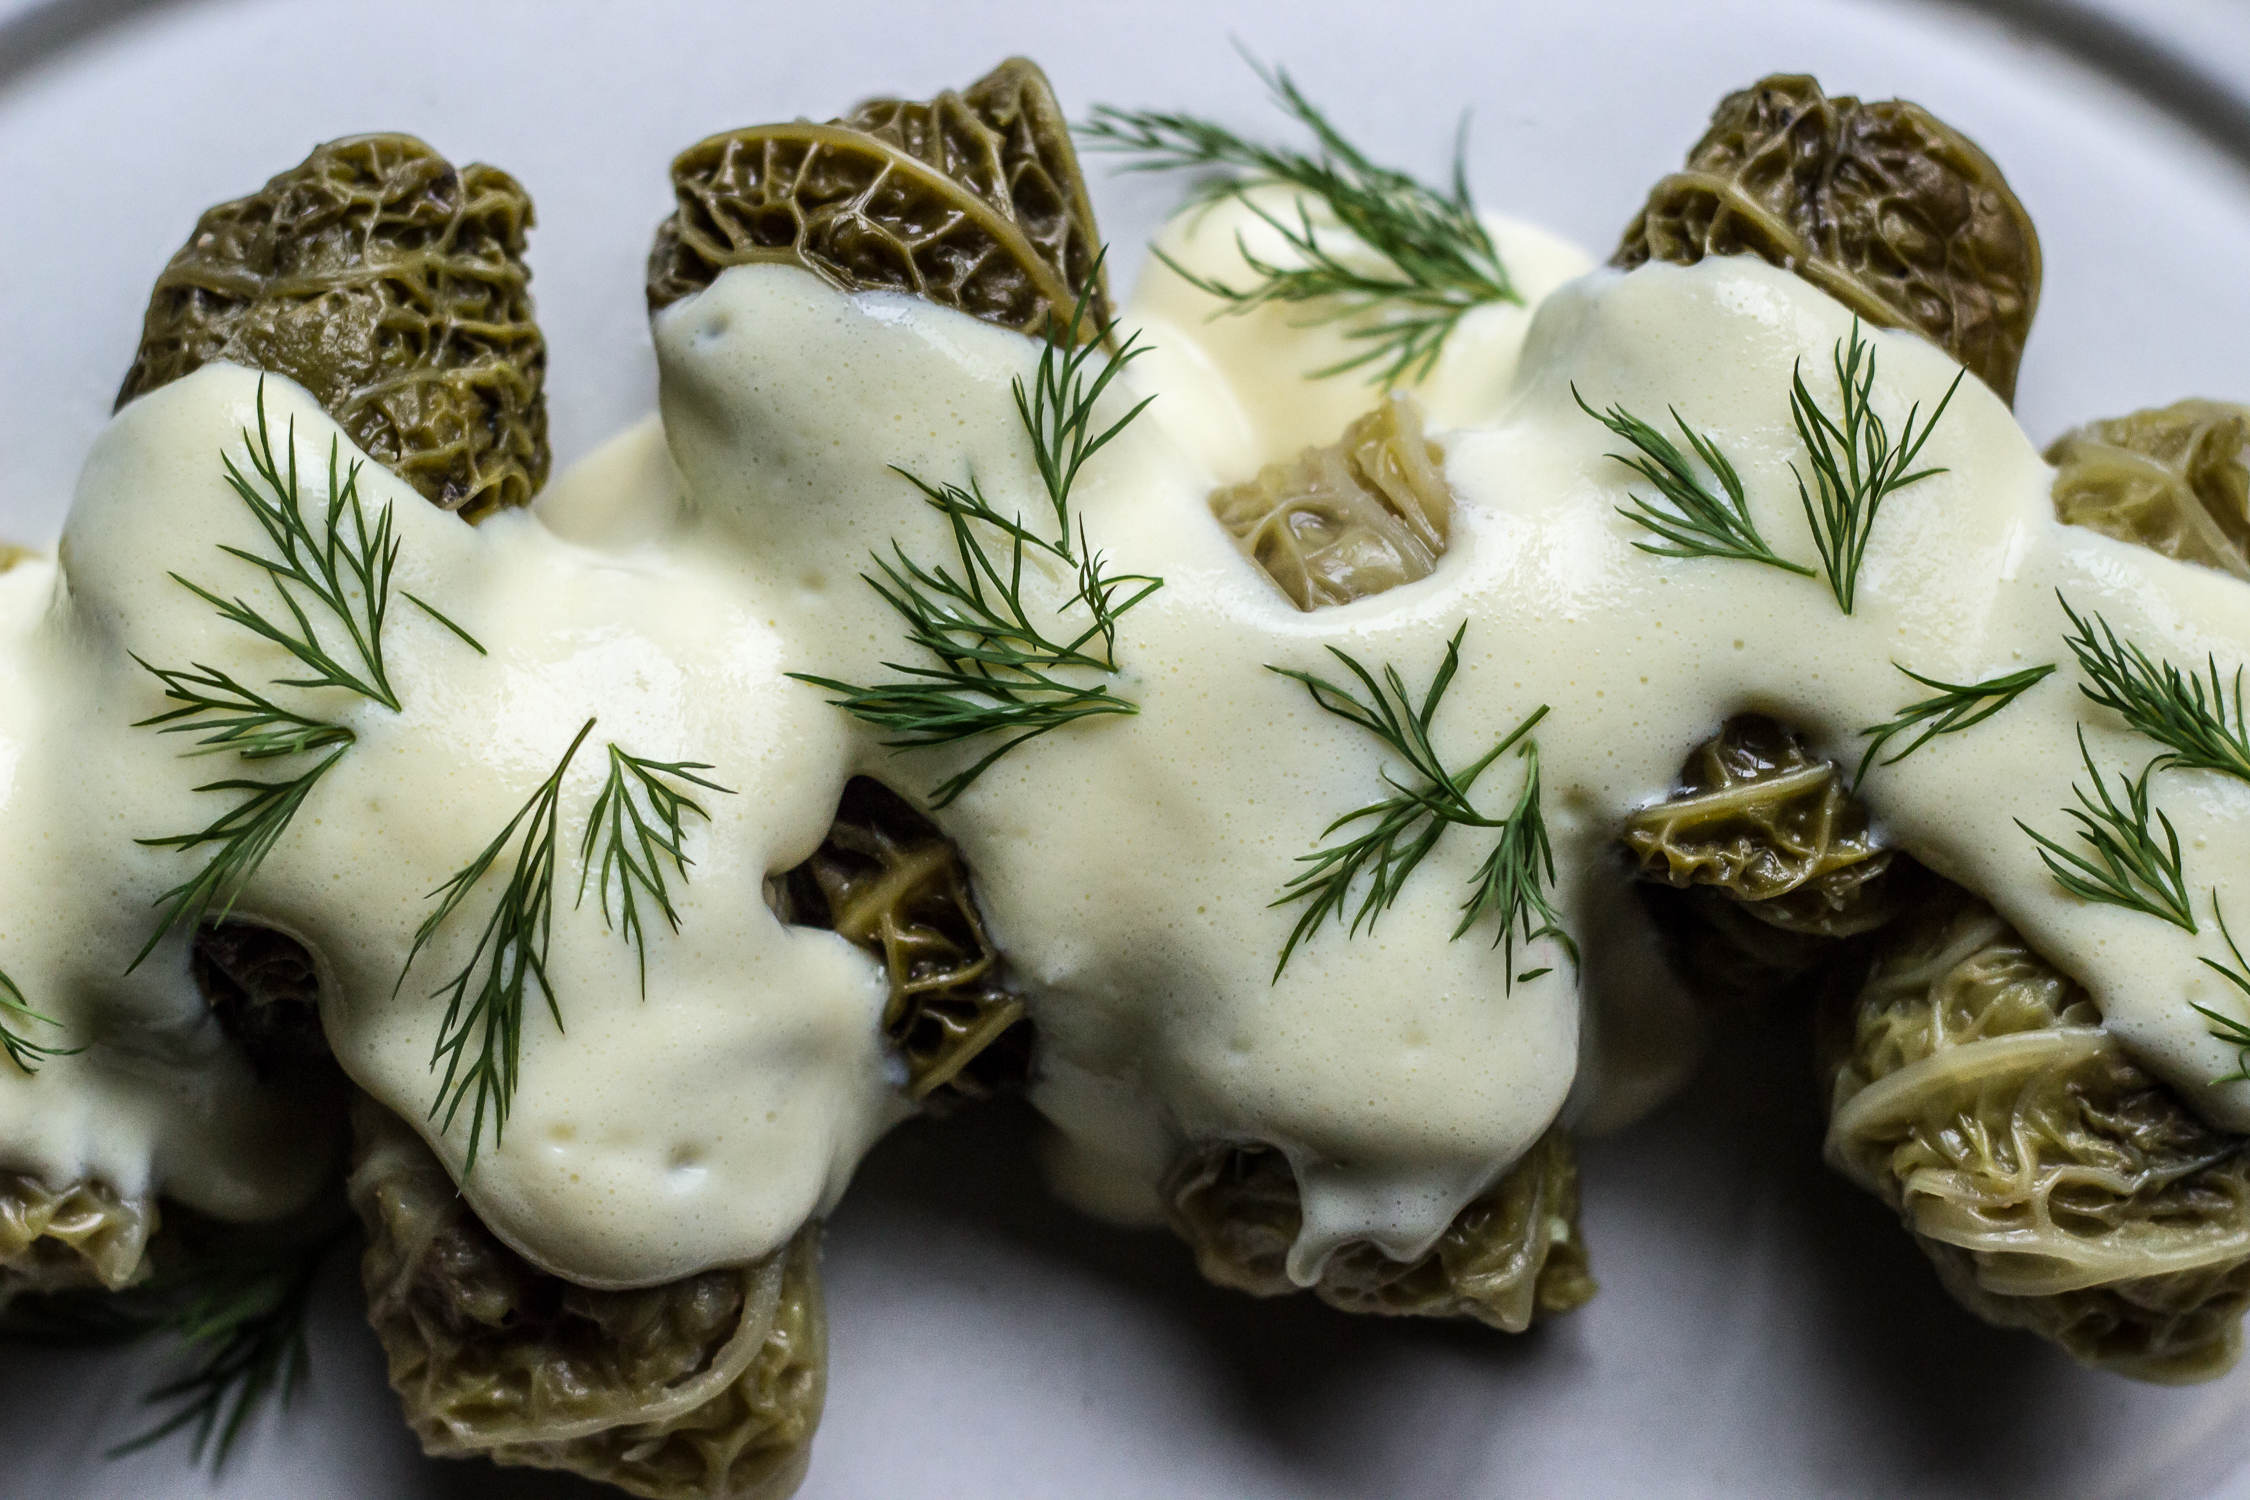 lahanodolmades - greek cabbage rolls